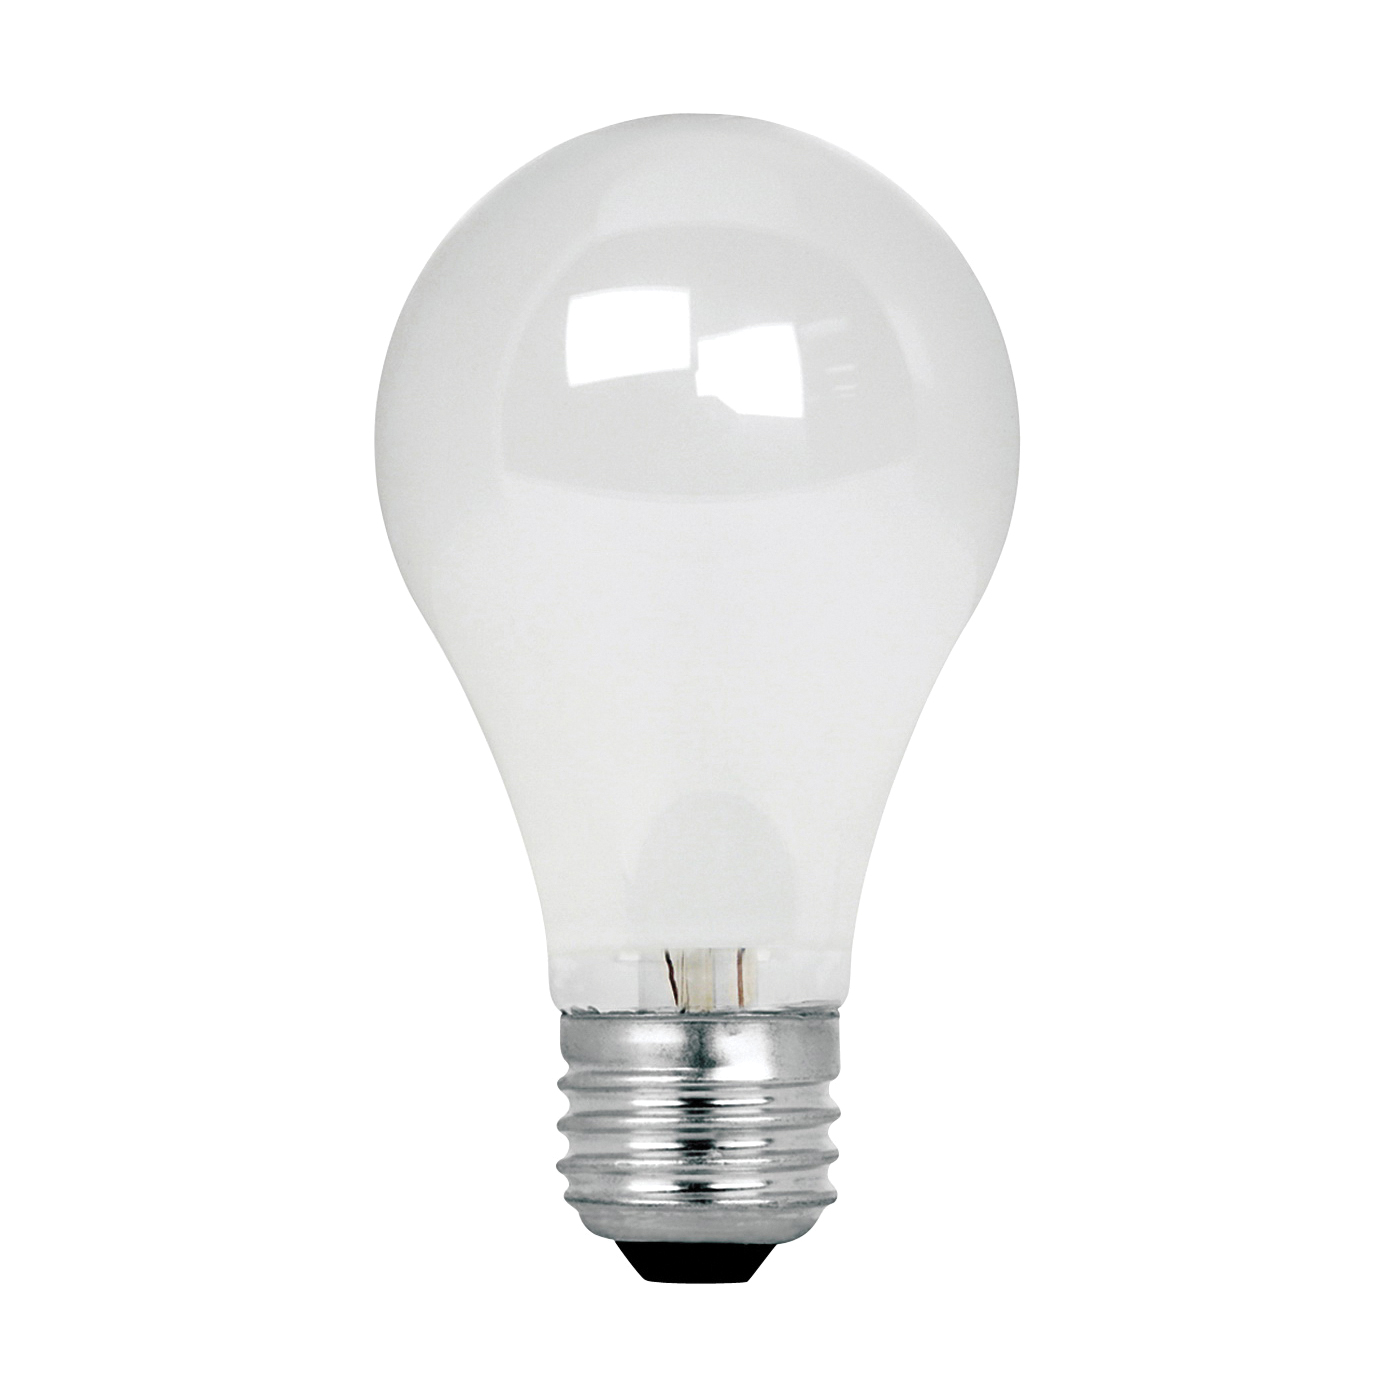 Q43A/W/4/RP Halogen Bulb, 43 W, Medium E26 Lamp Base, A19 Lamp, Soft White Light, 750 Lumens